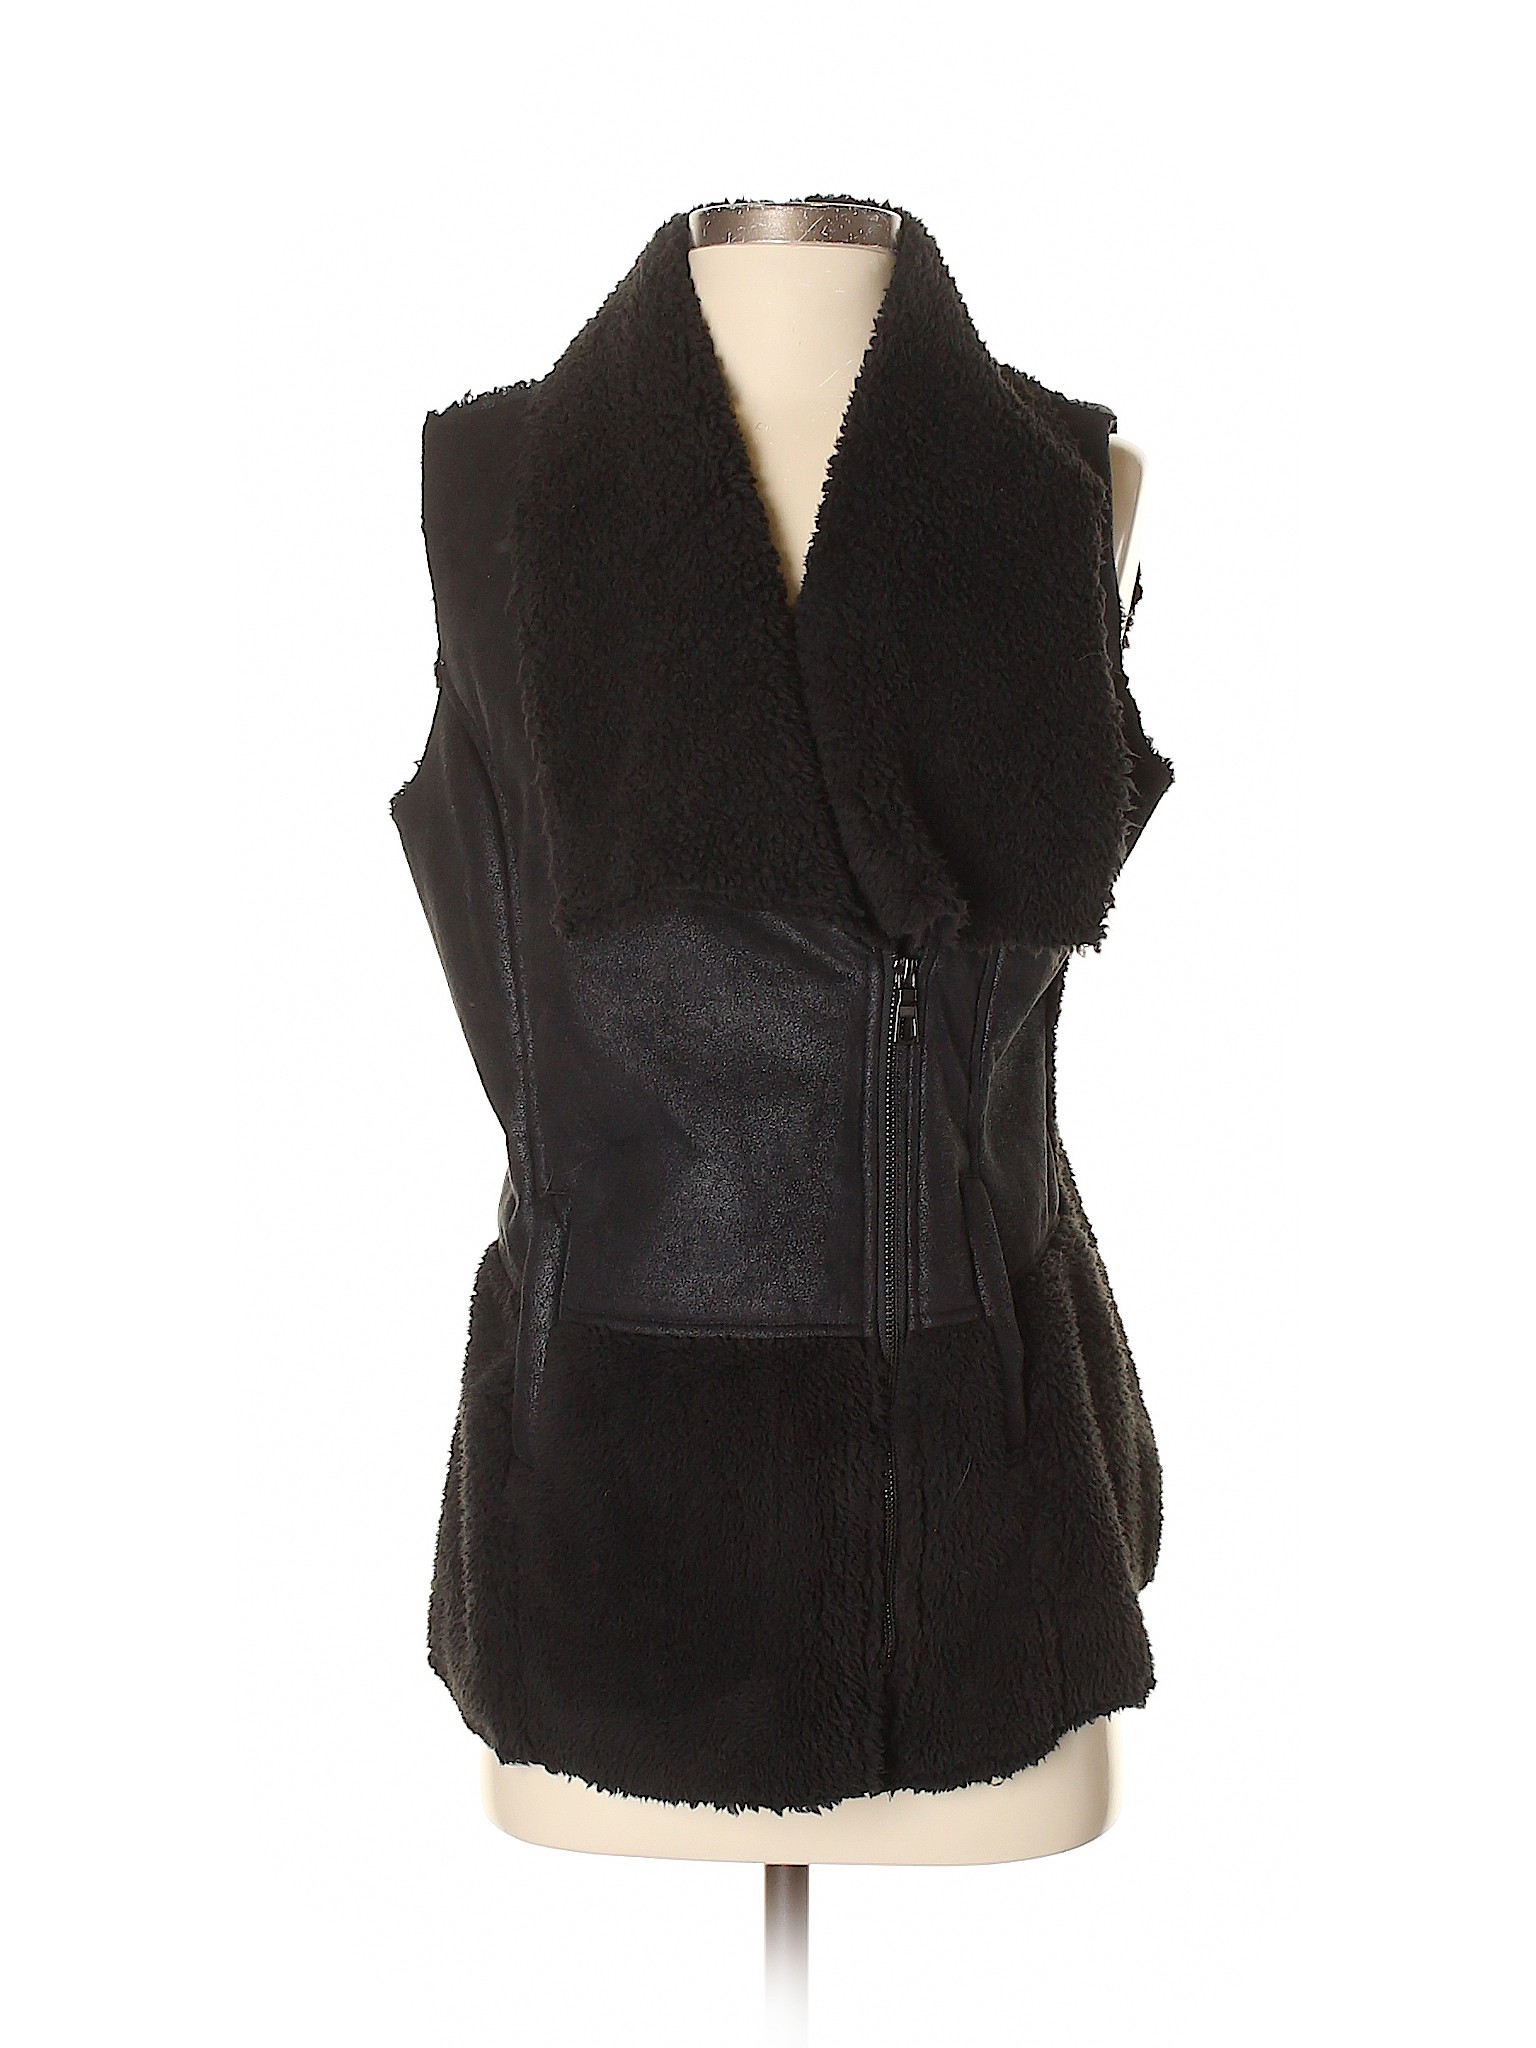 American Rag Cie 100% Polyester Solid Black Vest Size M - 83% off | thredUP